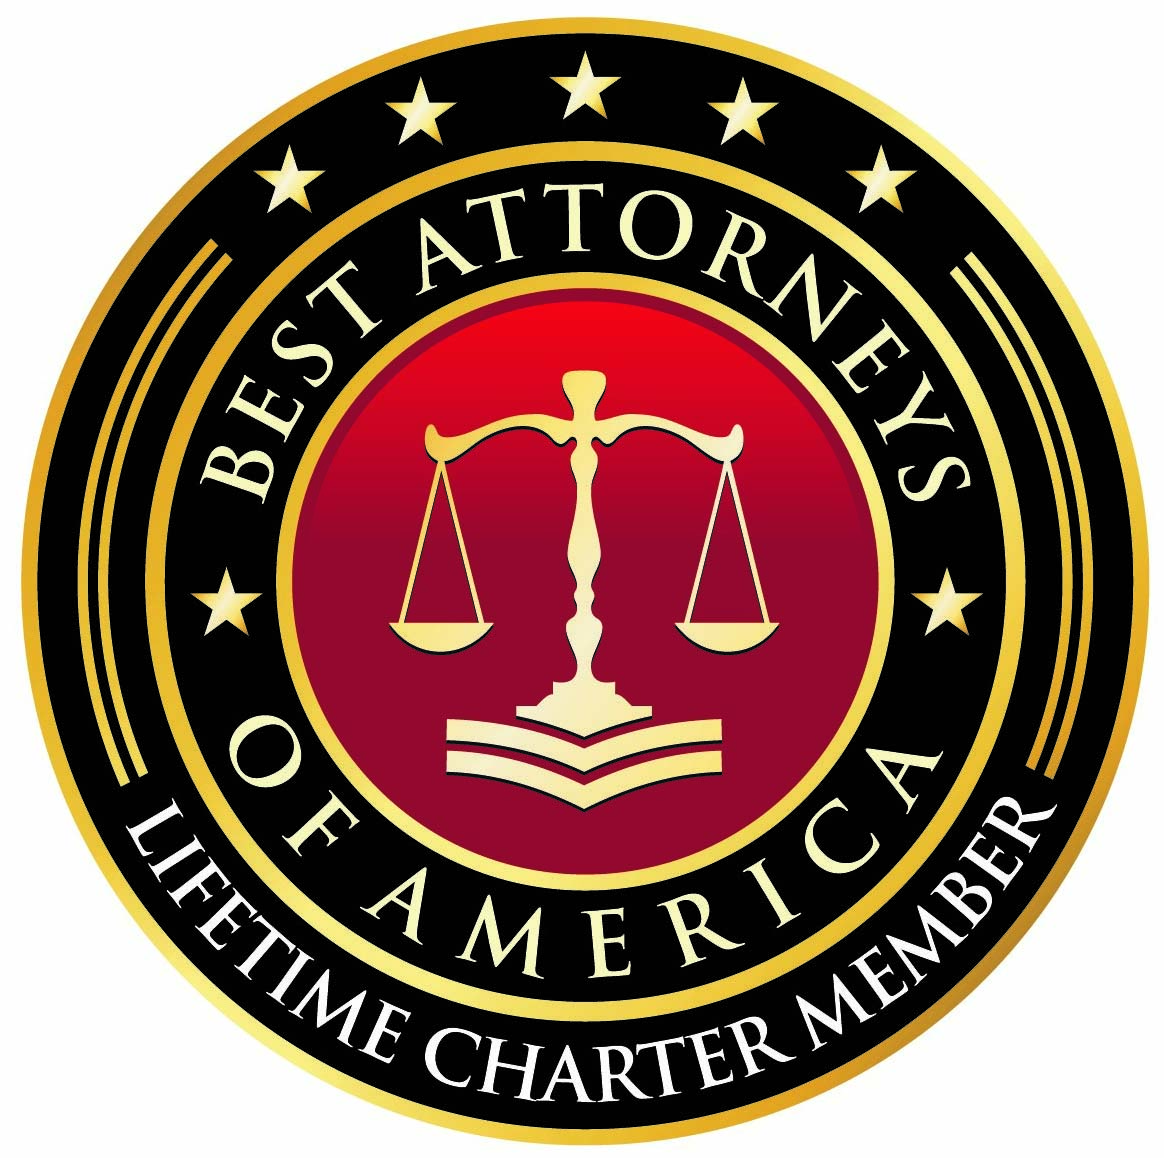 Best Attorneys in America - Life Charter Member